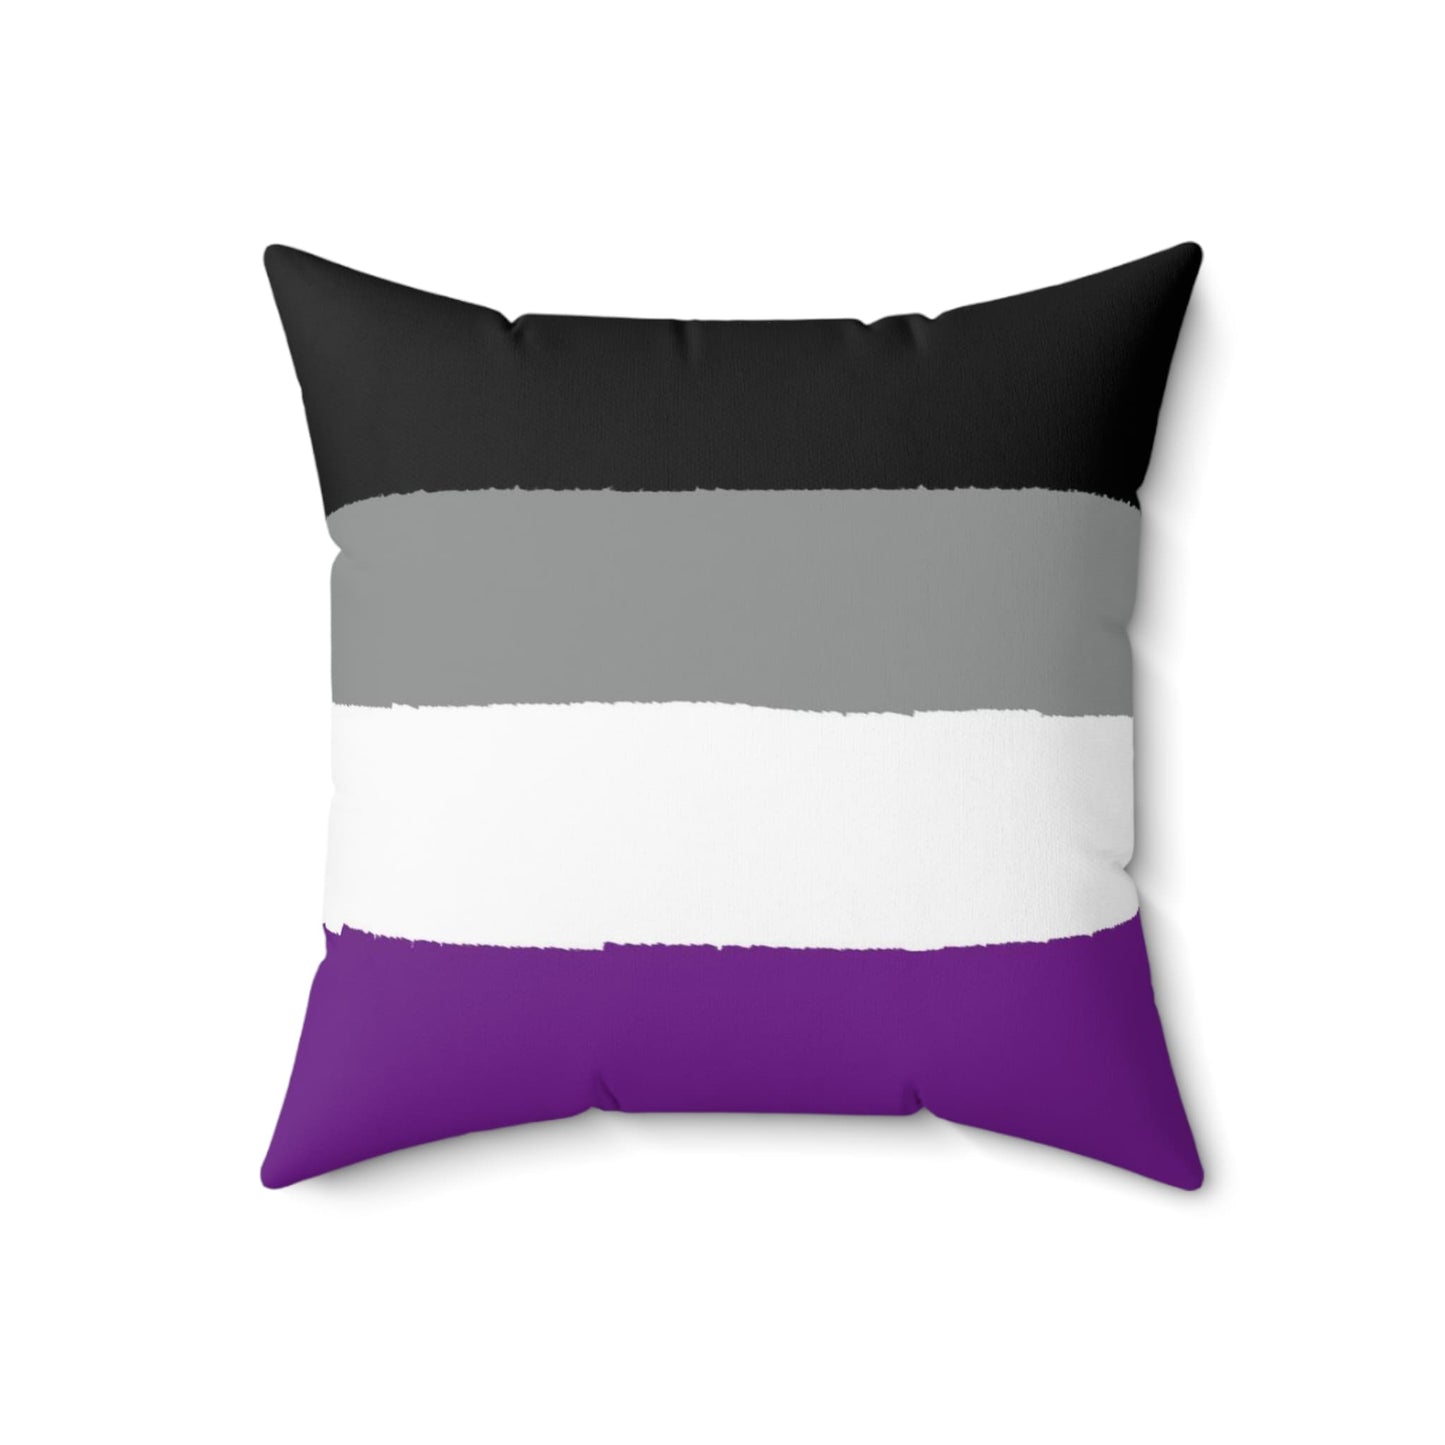 asexual pillow flatlay